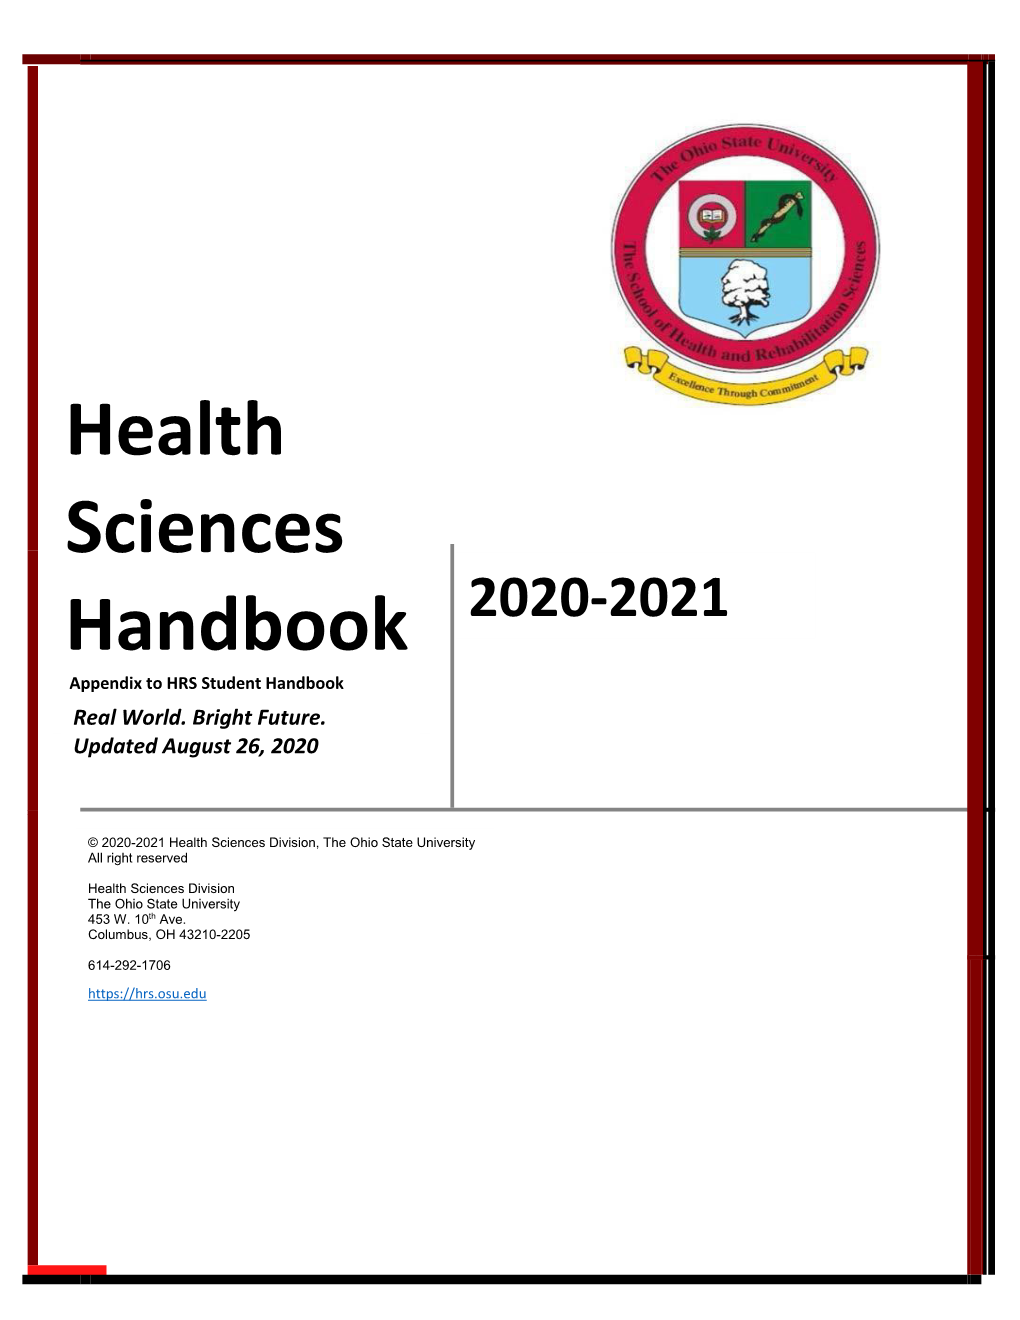 Health Sciences Handbook 2020-2021 Appendix to HRS Student Handbook Real World